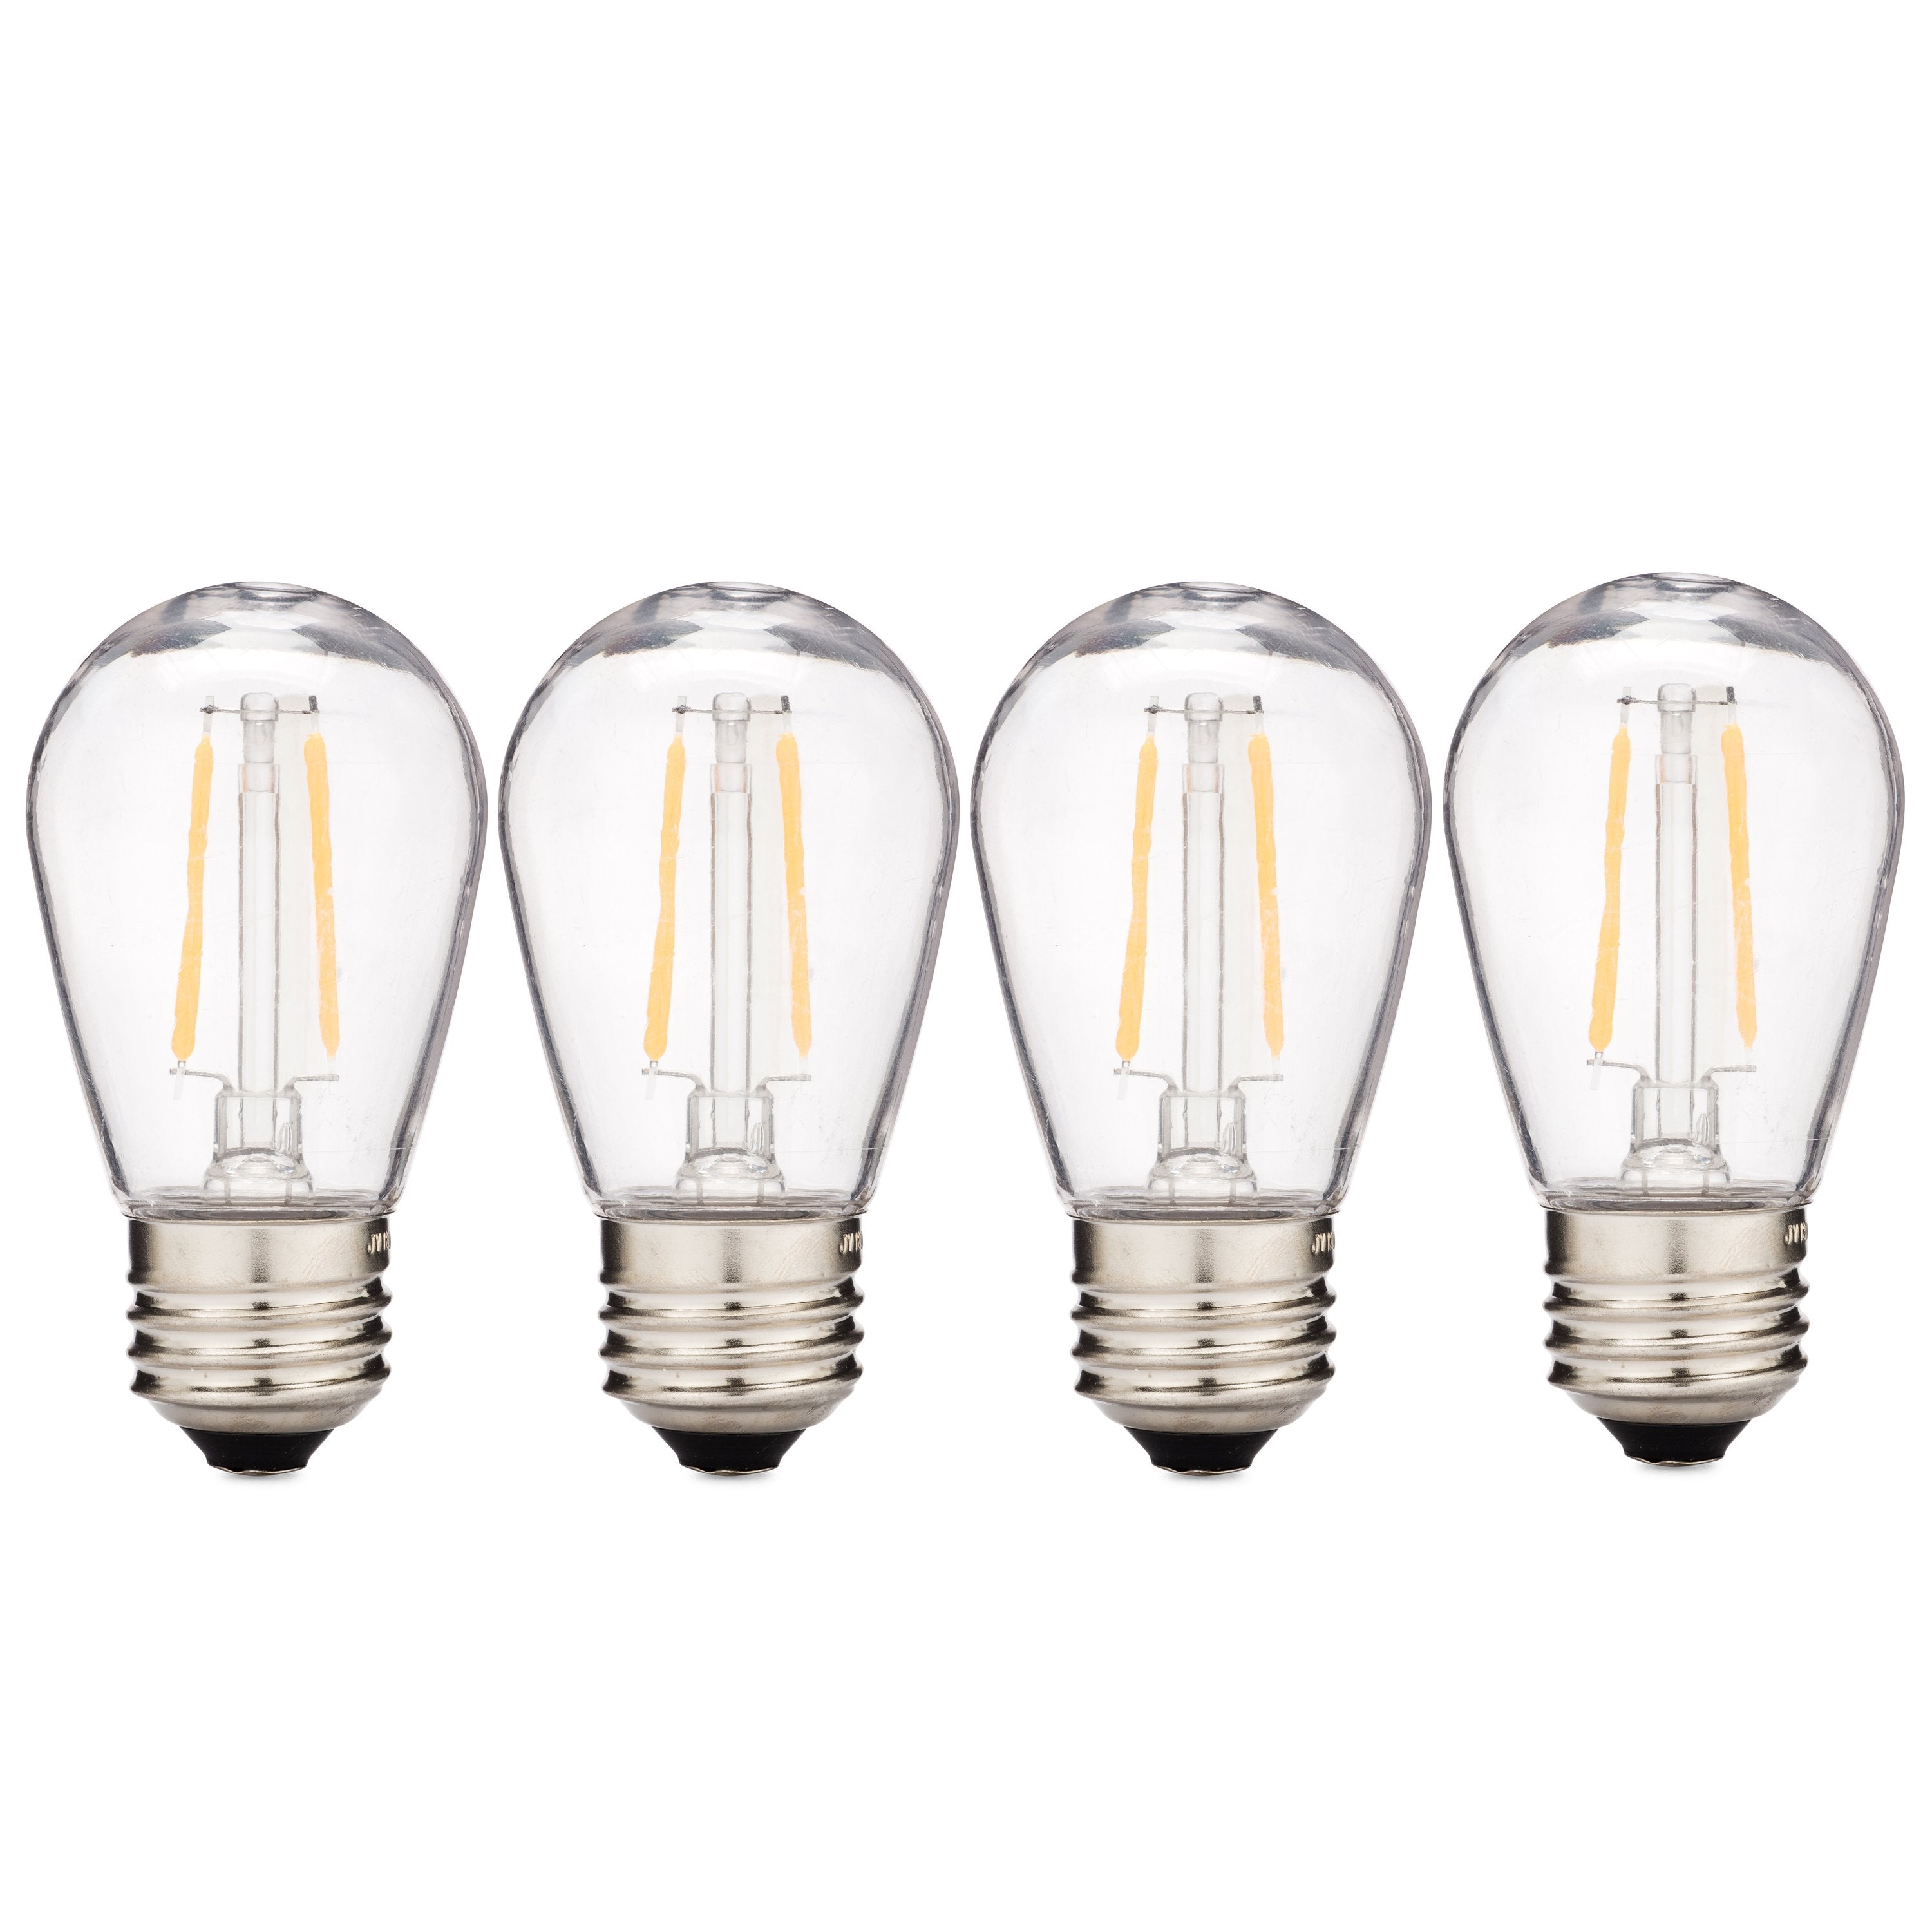 S14 LED Filament Bulbs · Sun Warm White Patio Light Replacement Bulbs - HLO Lighting